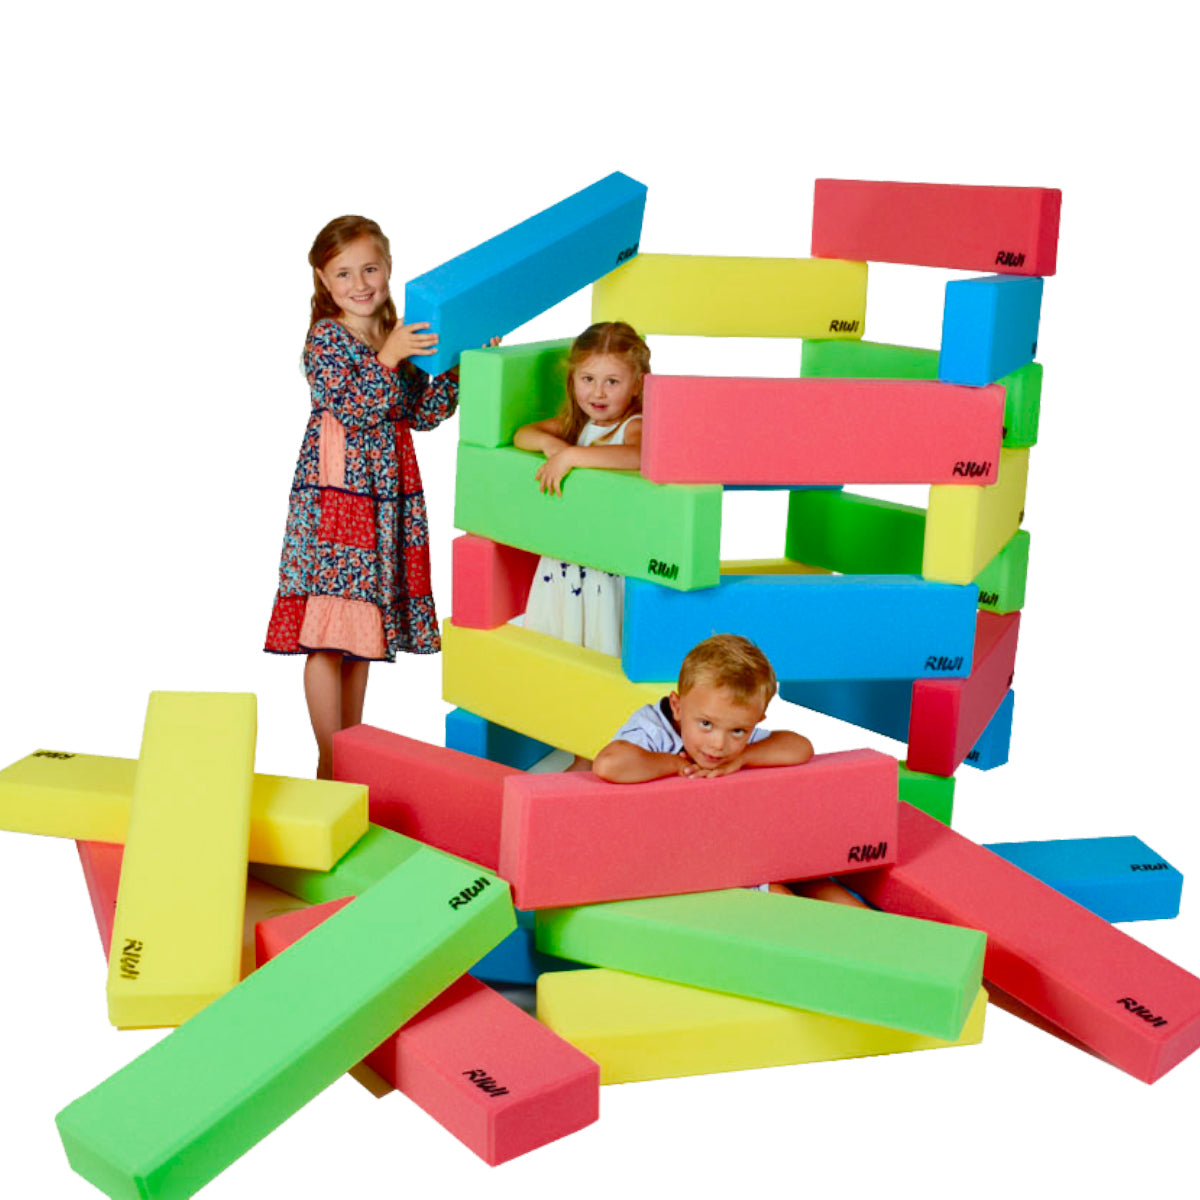 41 Piece Construction Foam Blocks for Kids